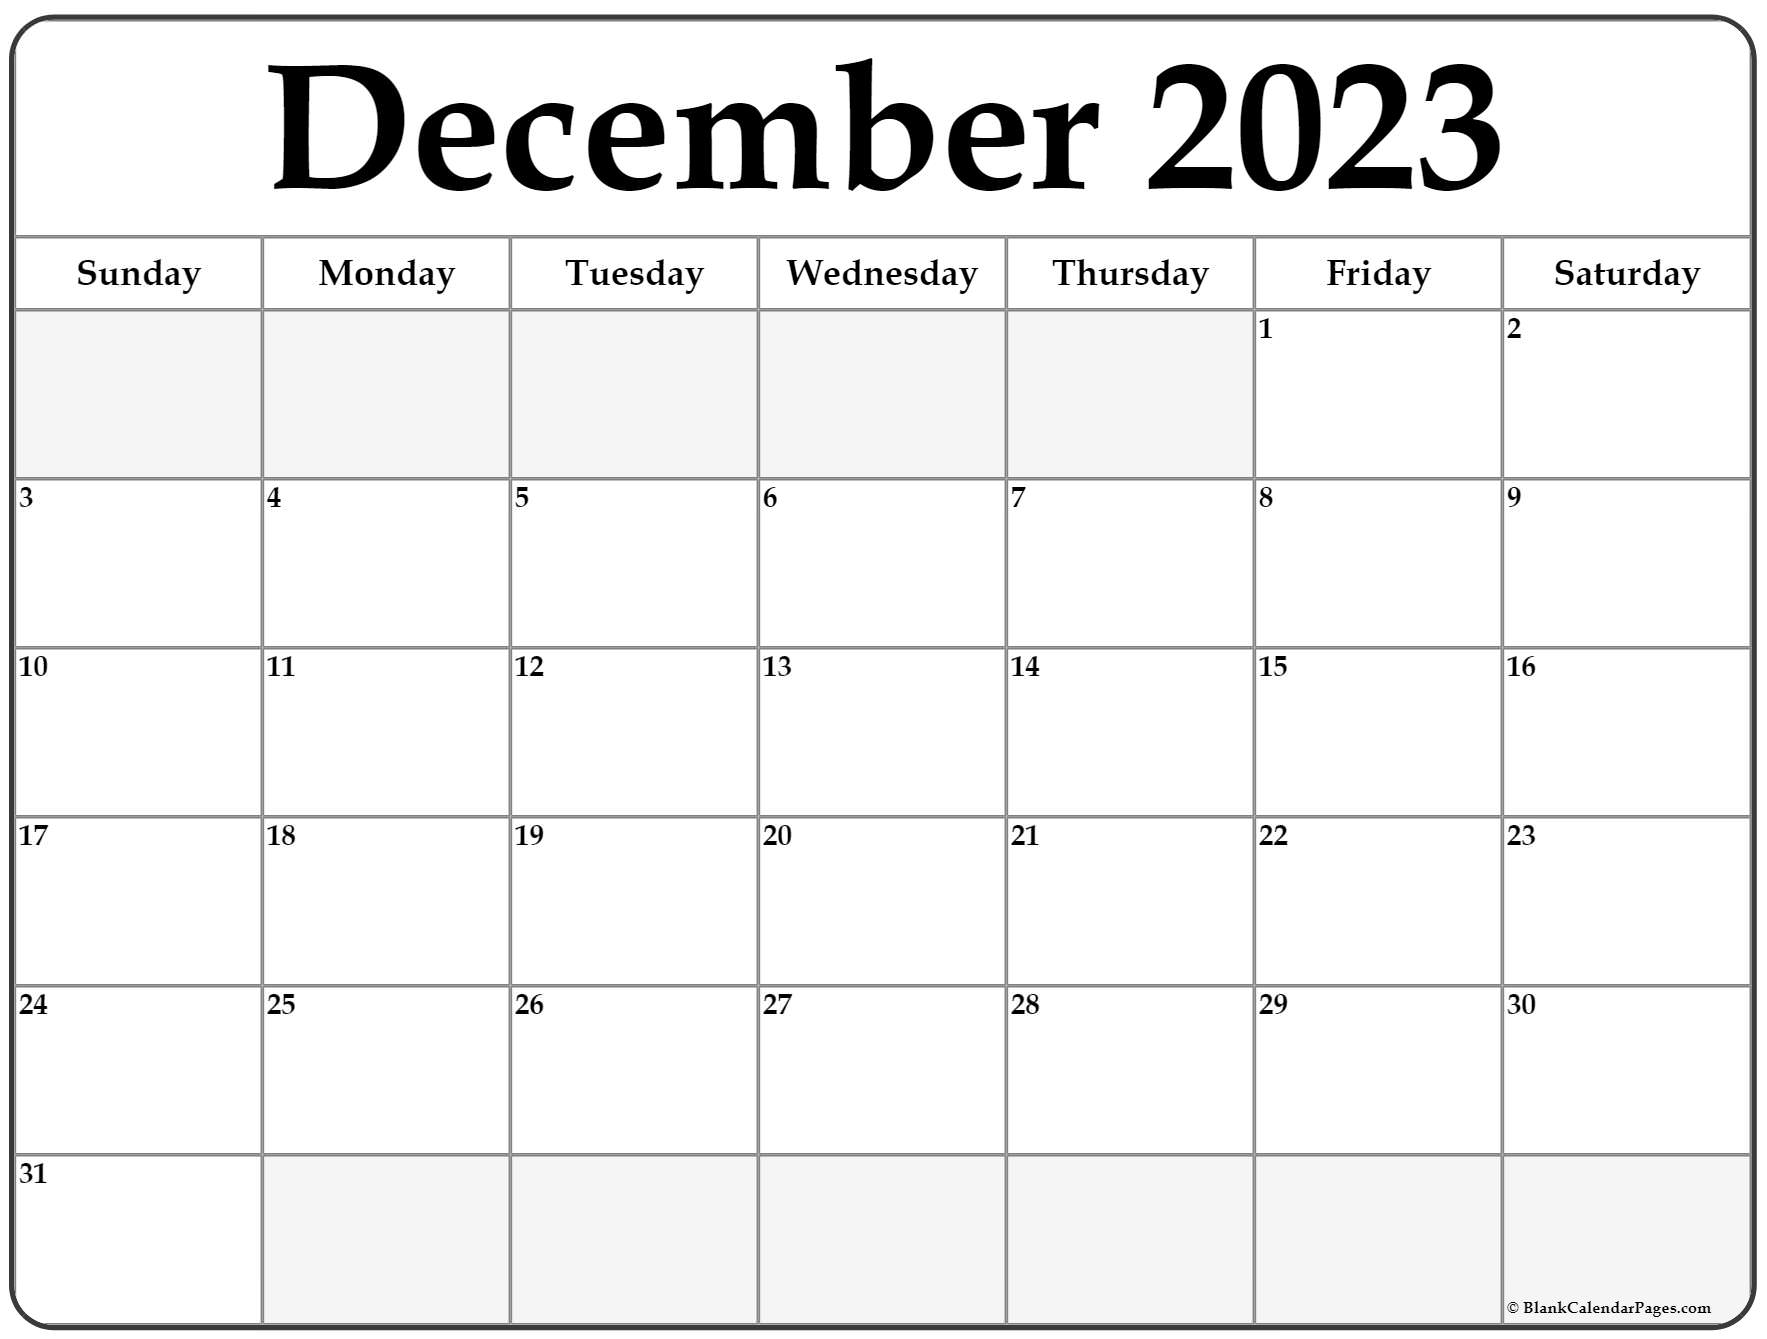 December 2023 calendar | free printable calendar